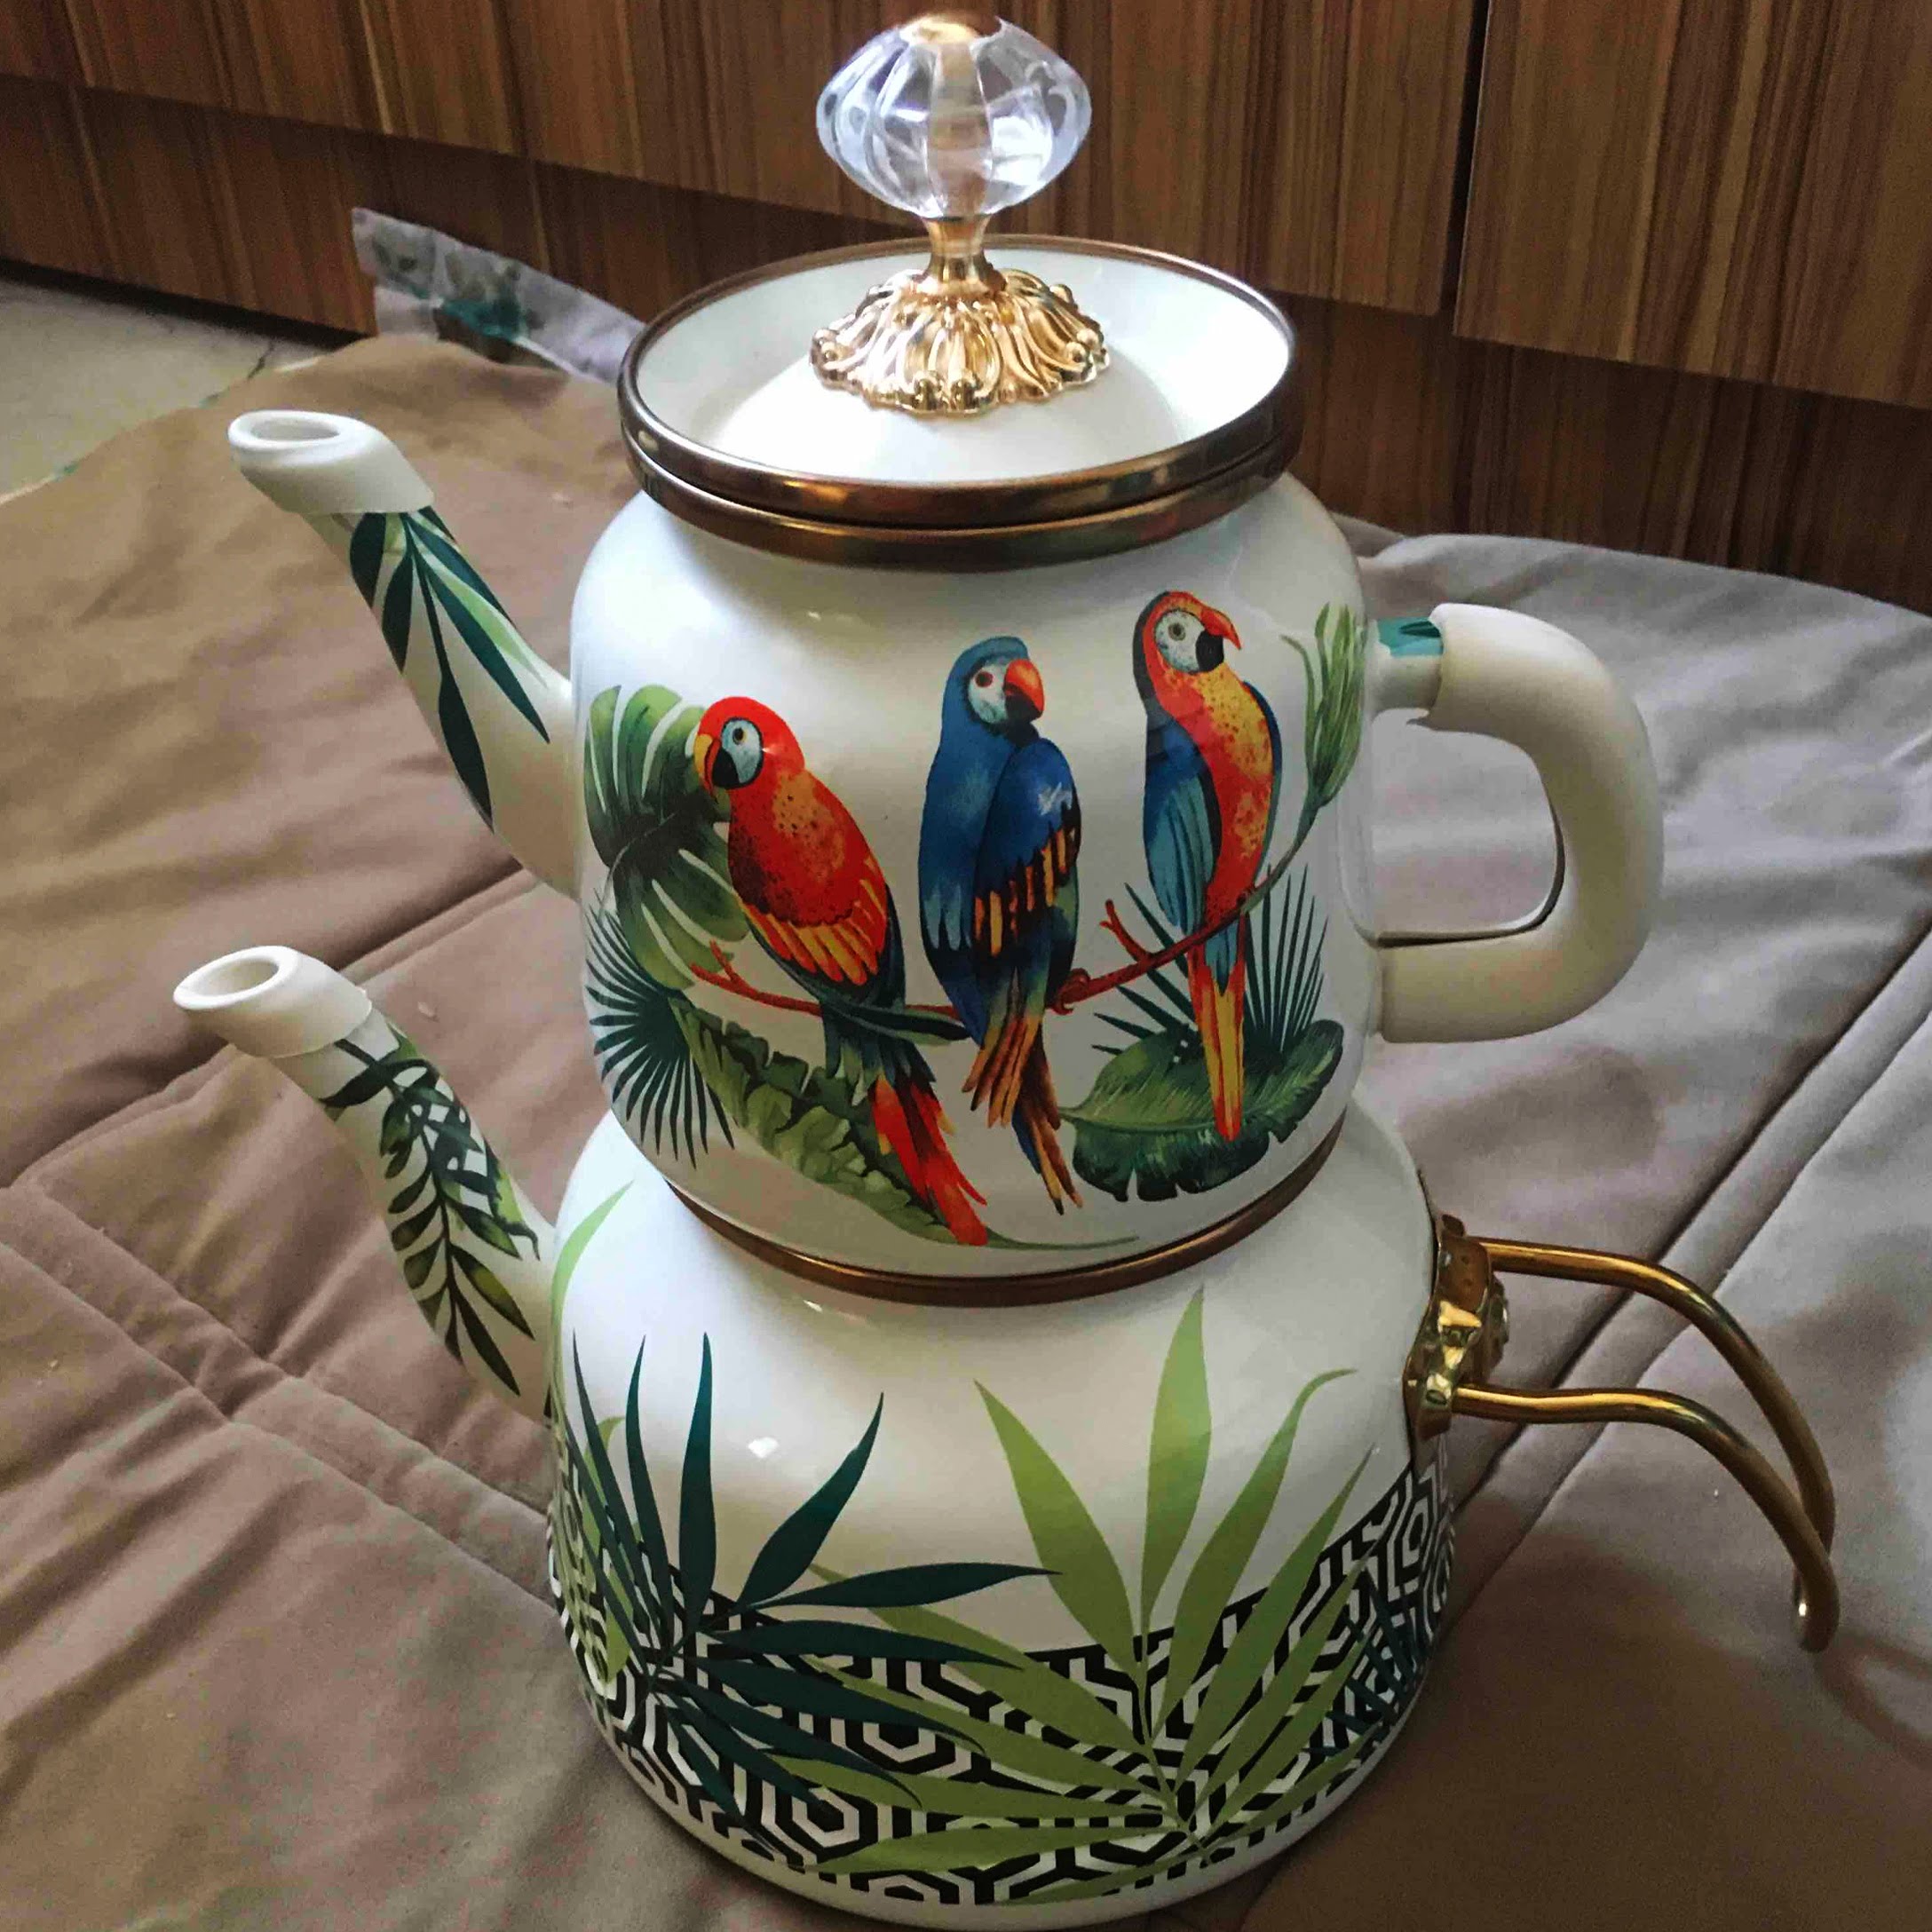 https://traditionalturk.com/wp-content/uploads/2021/08/vintage-parrot-pattern-enamel-turkish-tea-pot-kettle-5.jpg